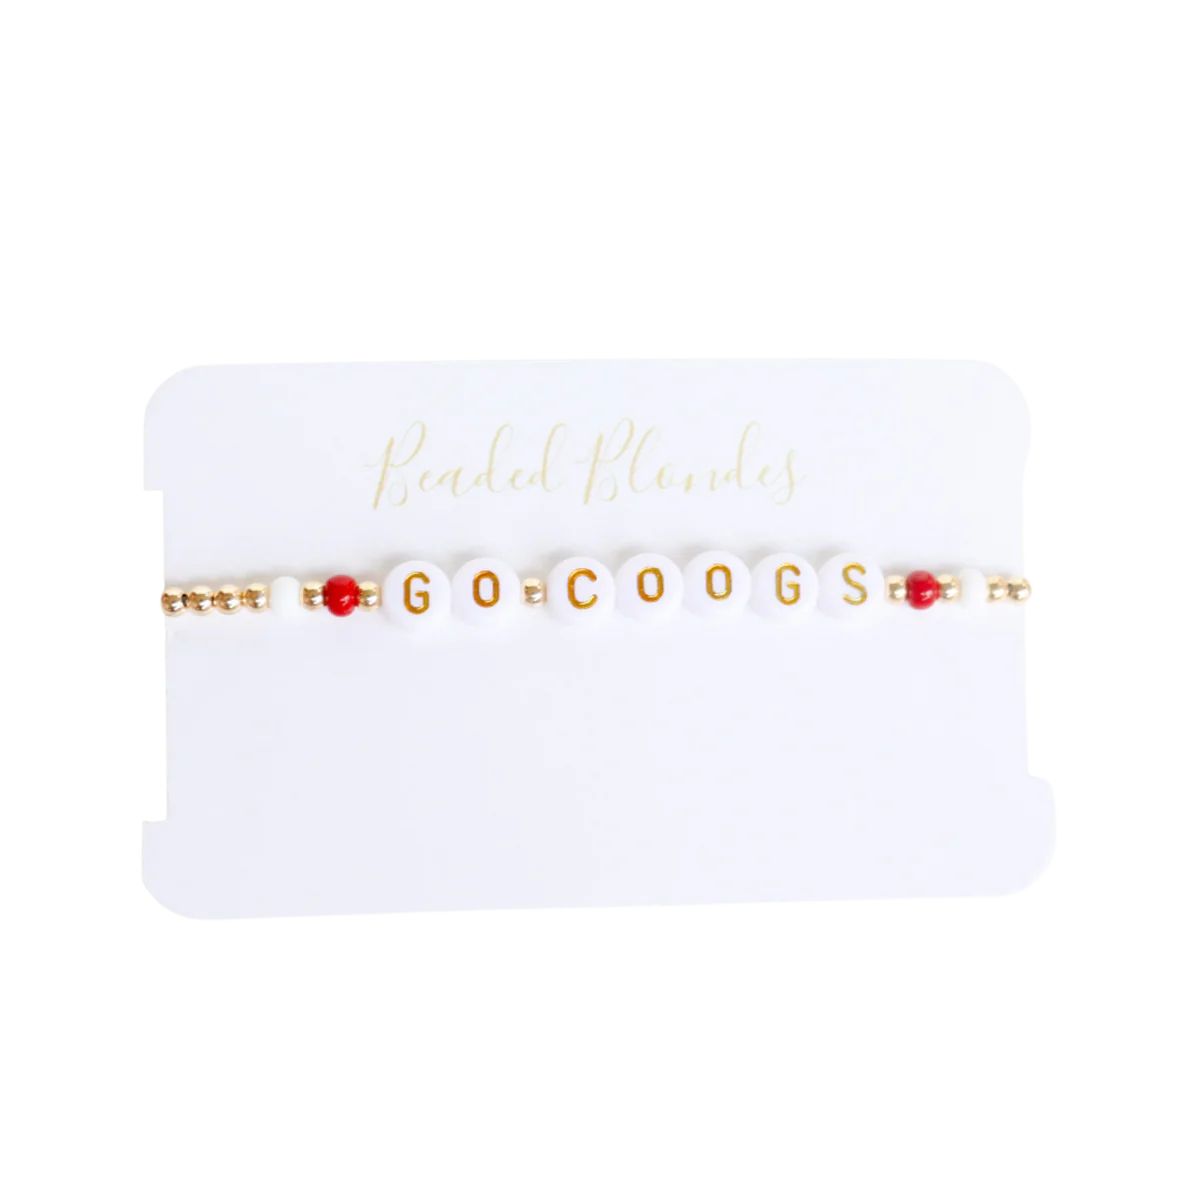 Go Coogs Gameday Bracelet | Beaded Blondes